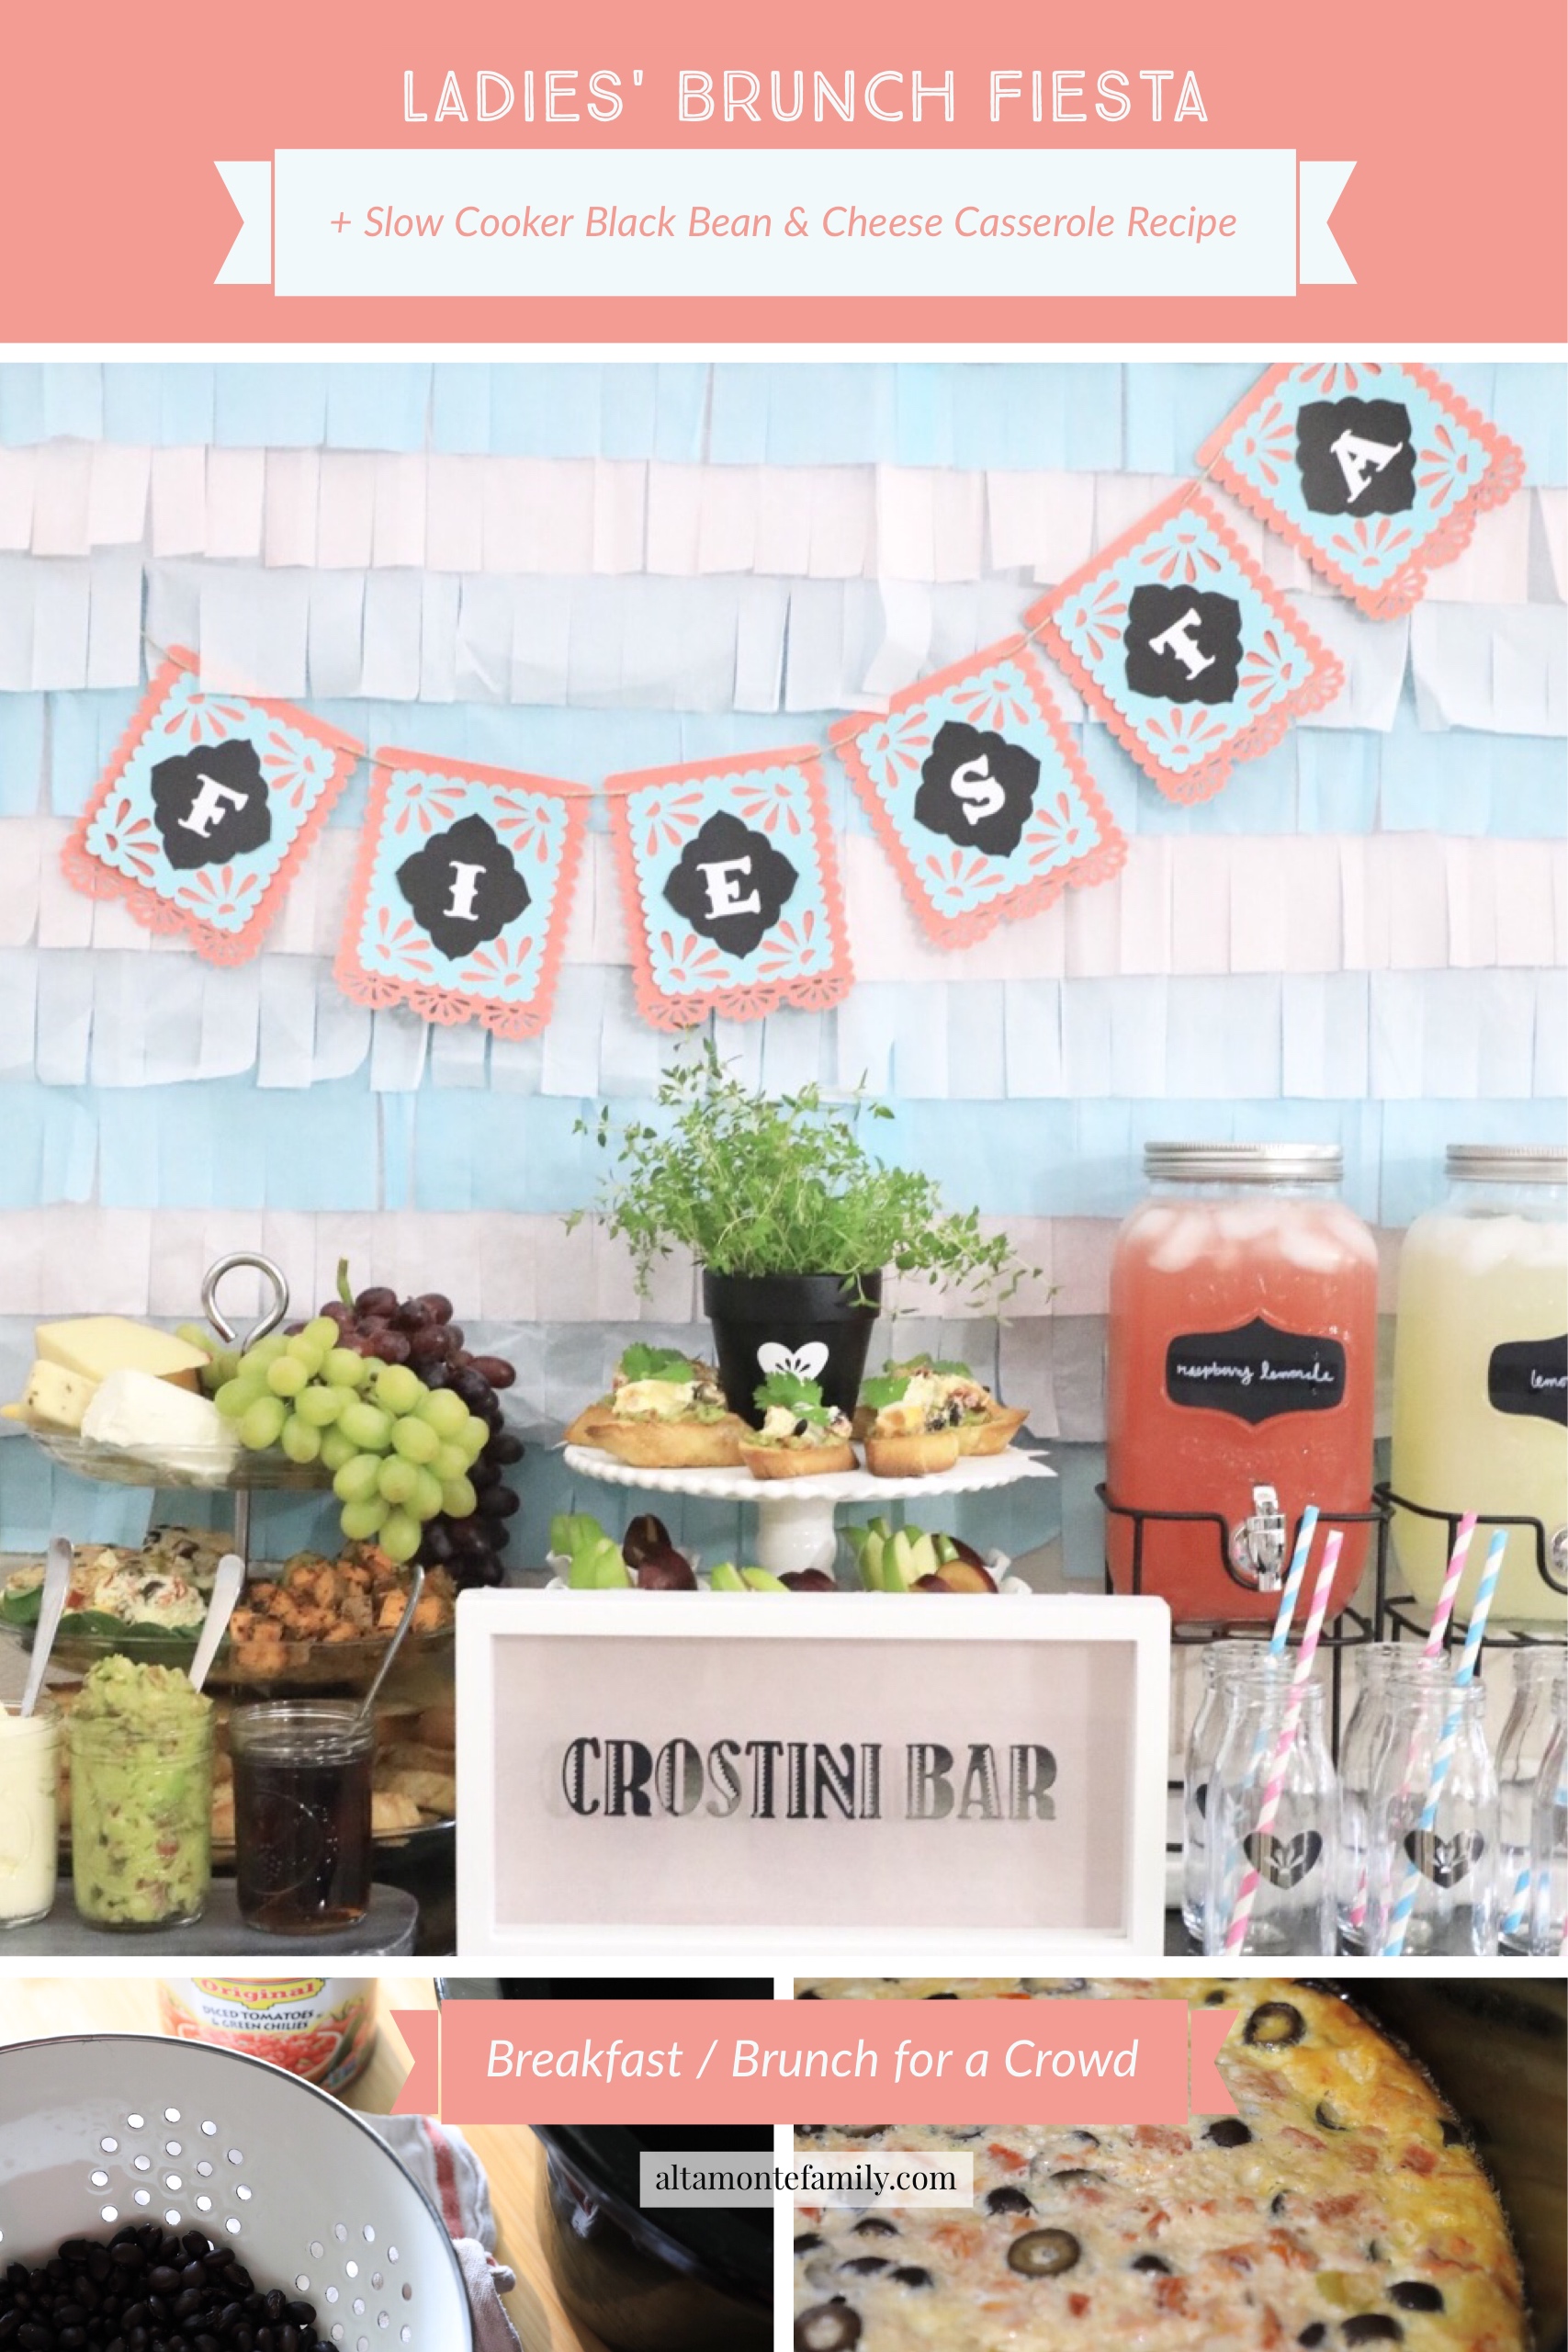 Fiesta Crostini Bar - Mother's Day / Ladies' Brunch